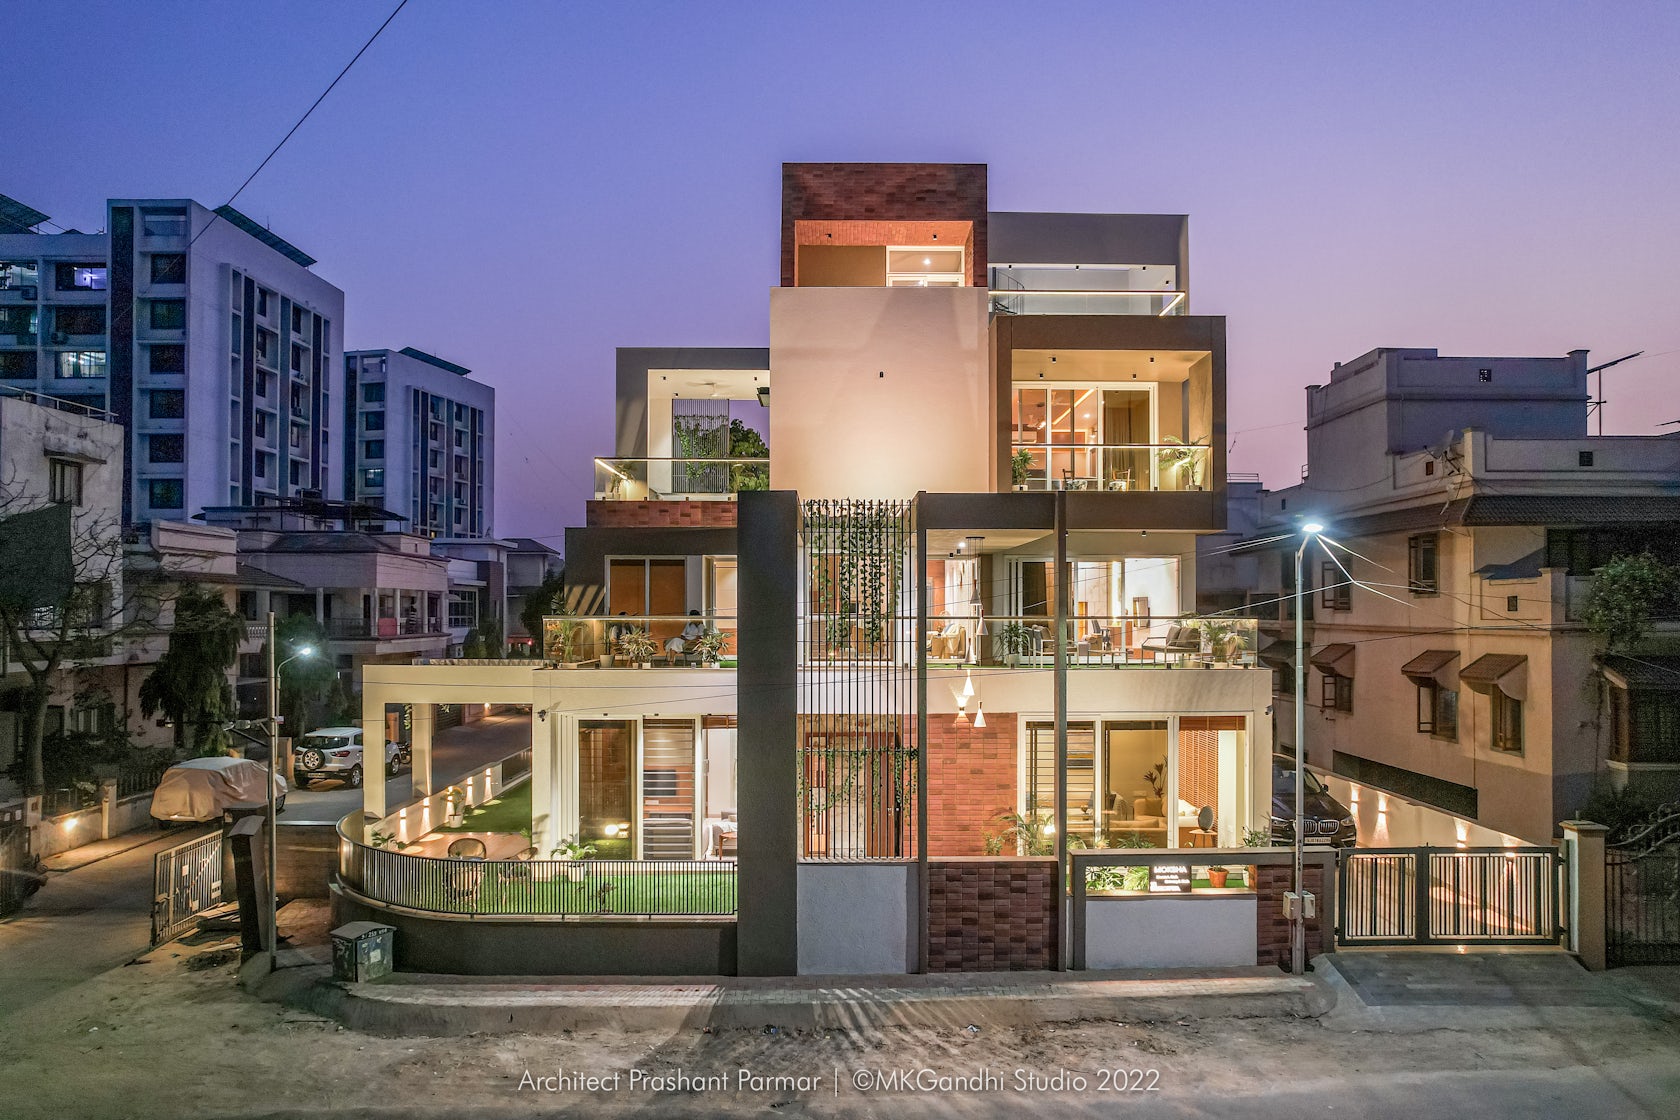 © Prashant Parmar Architect | Shayona Consultant